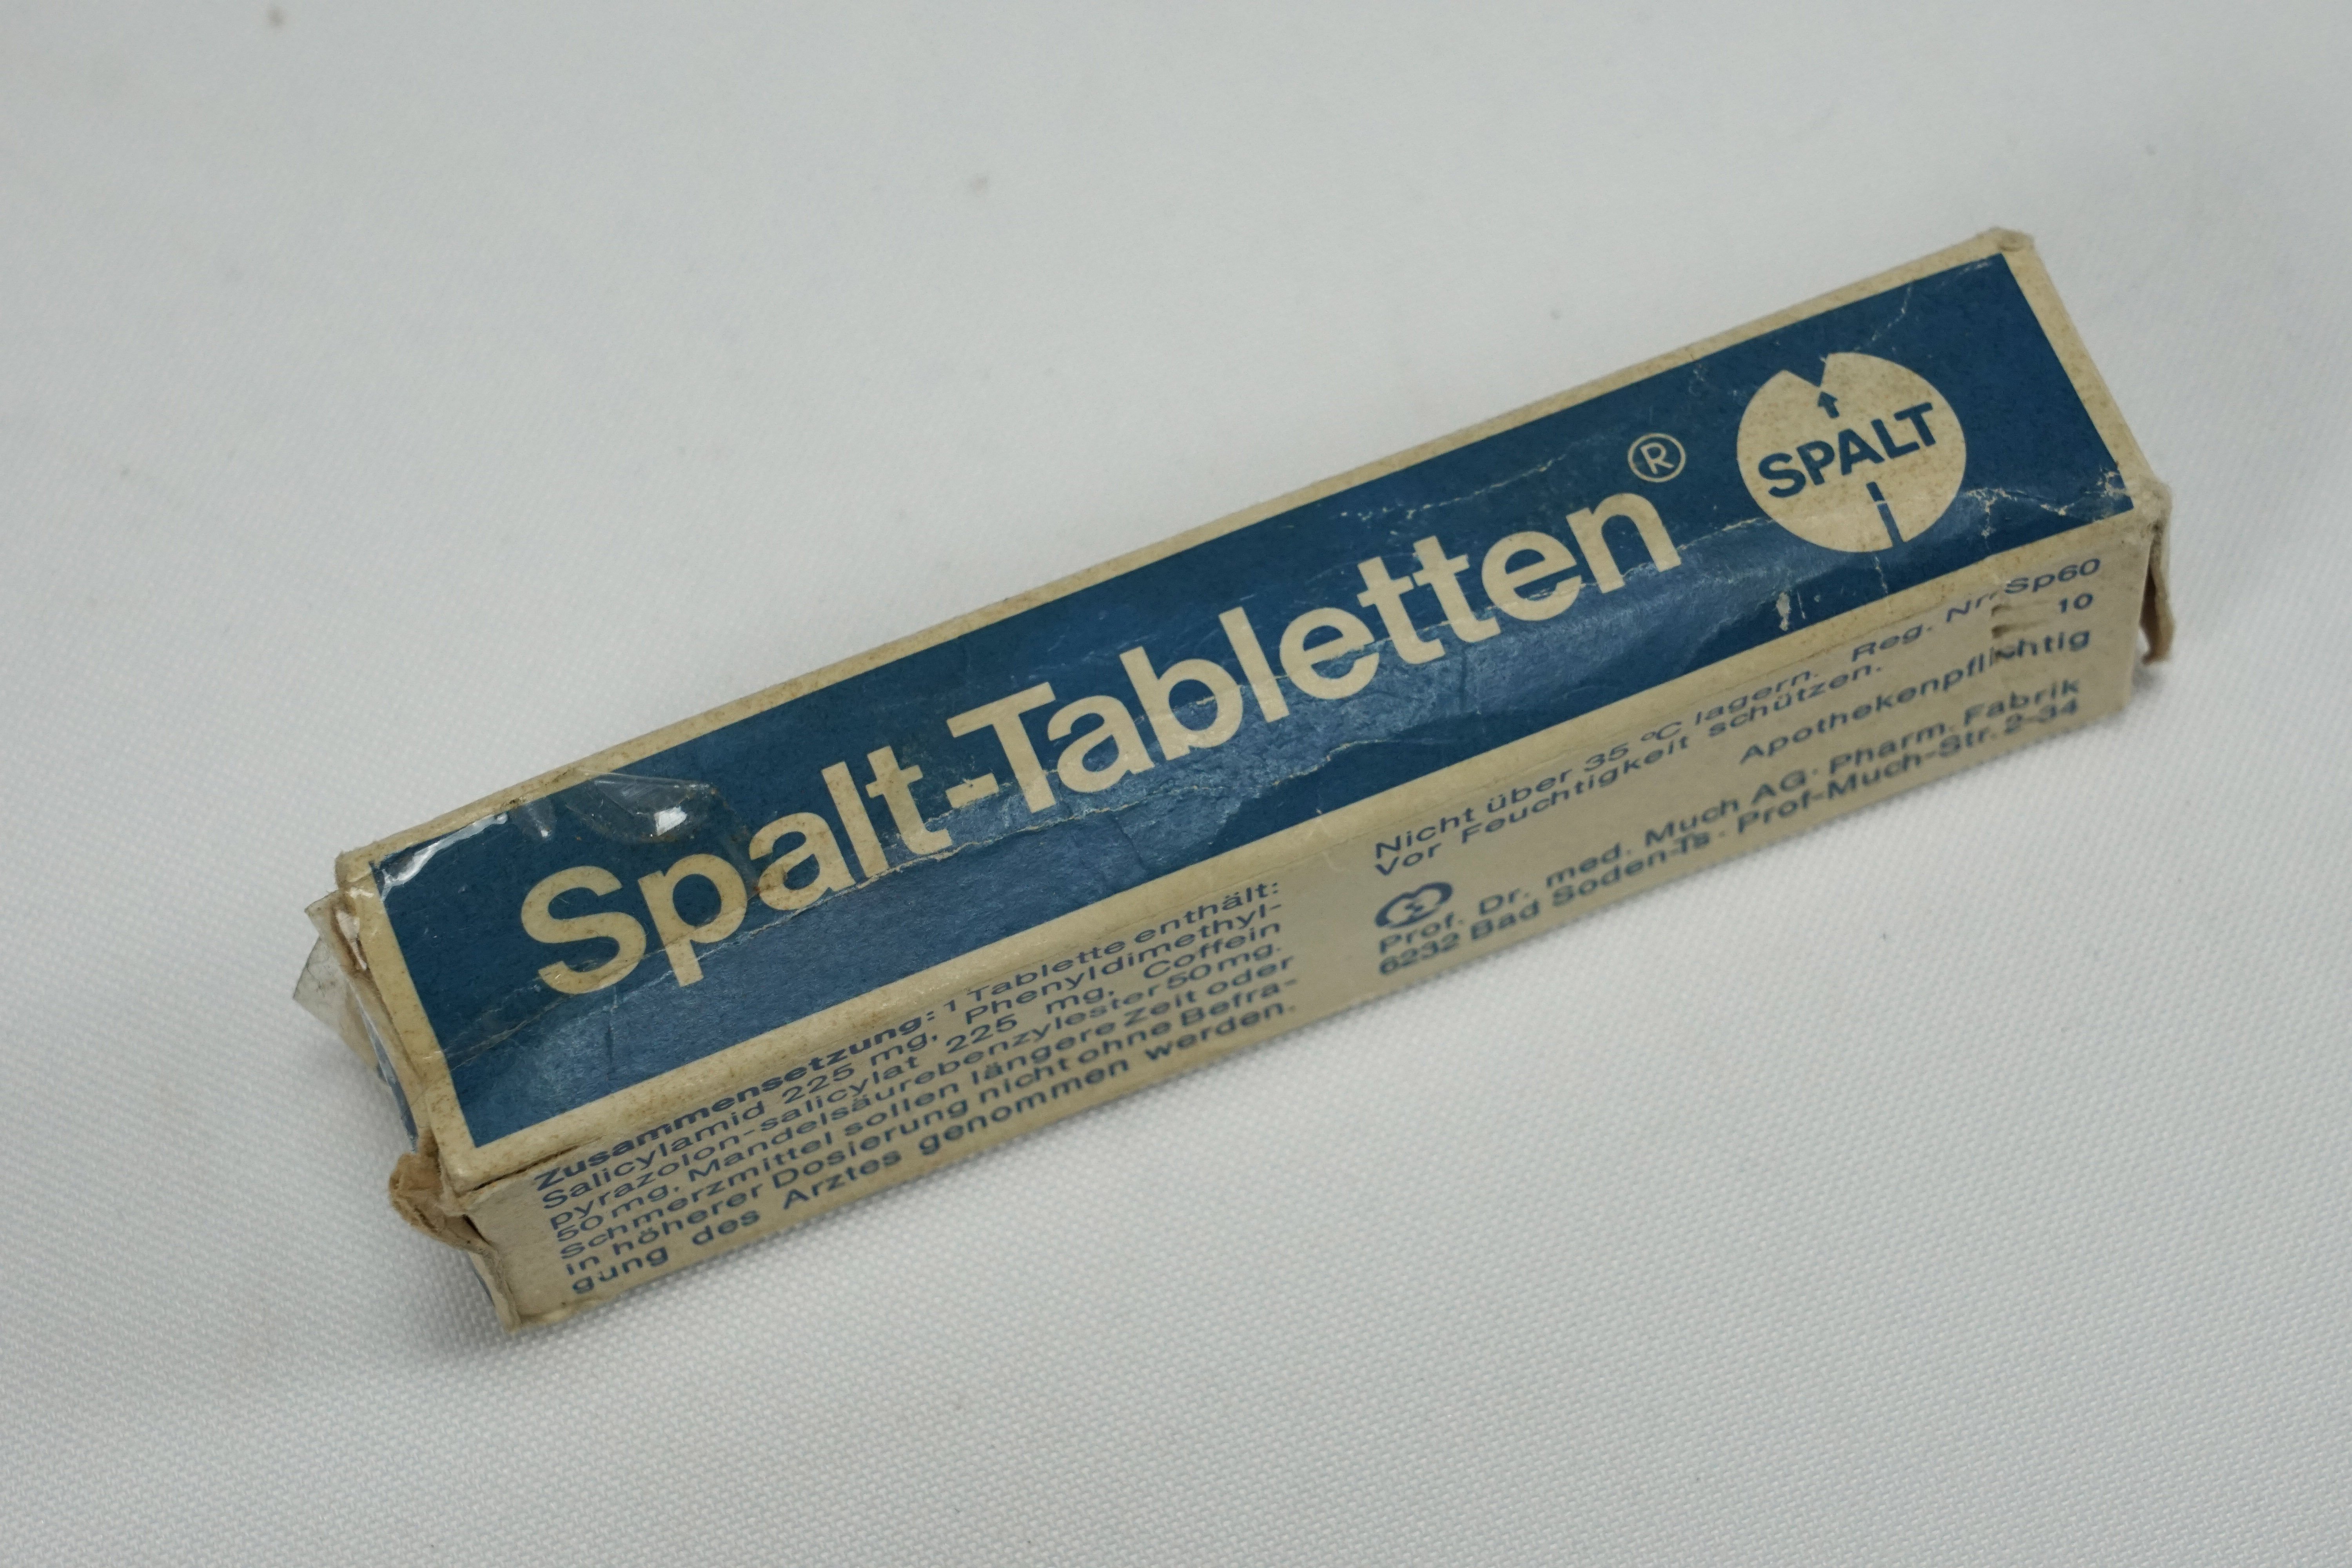 Spalt-Tablettenschachtel (Krankenhausmuseum Bielefeld e.V. CC BY-NC-SA)